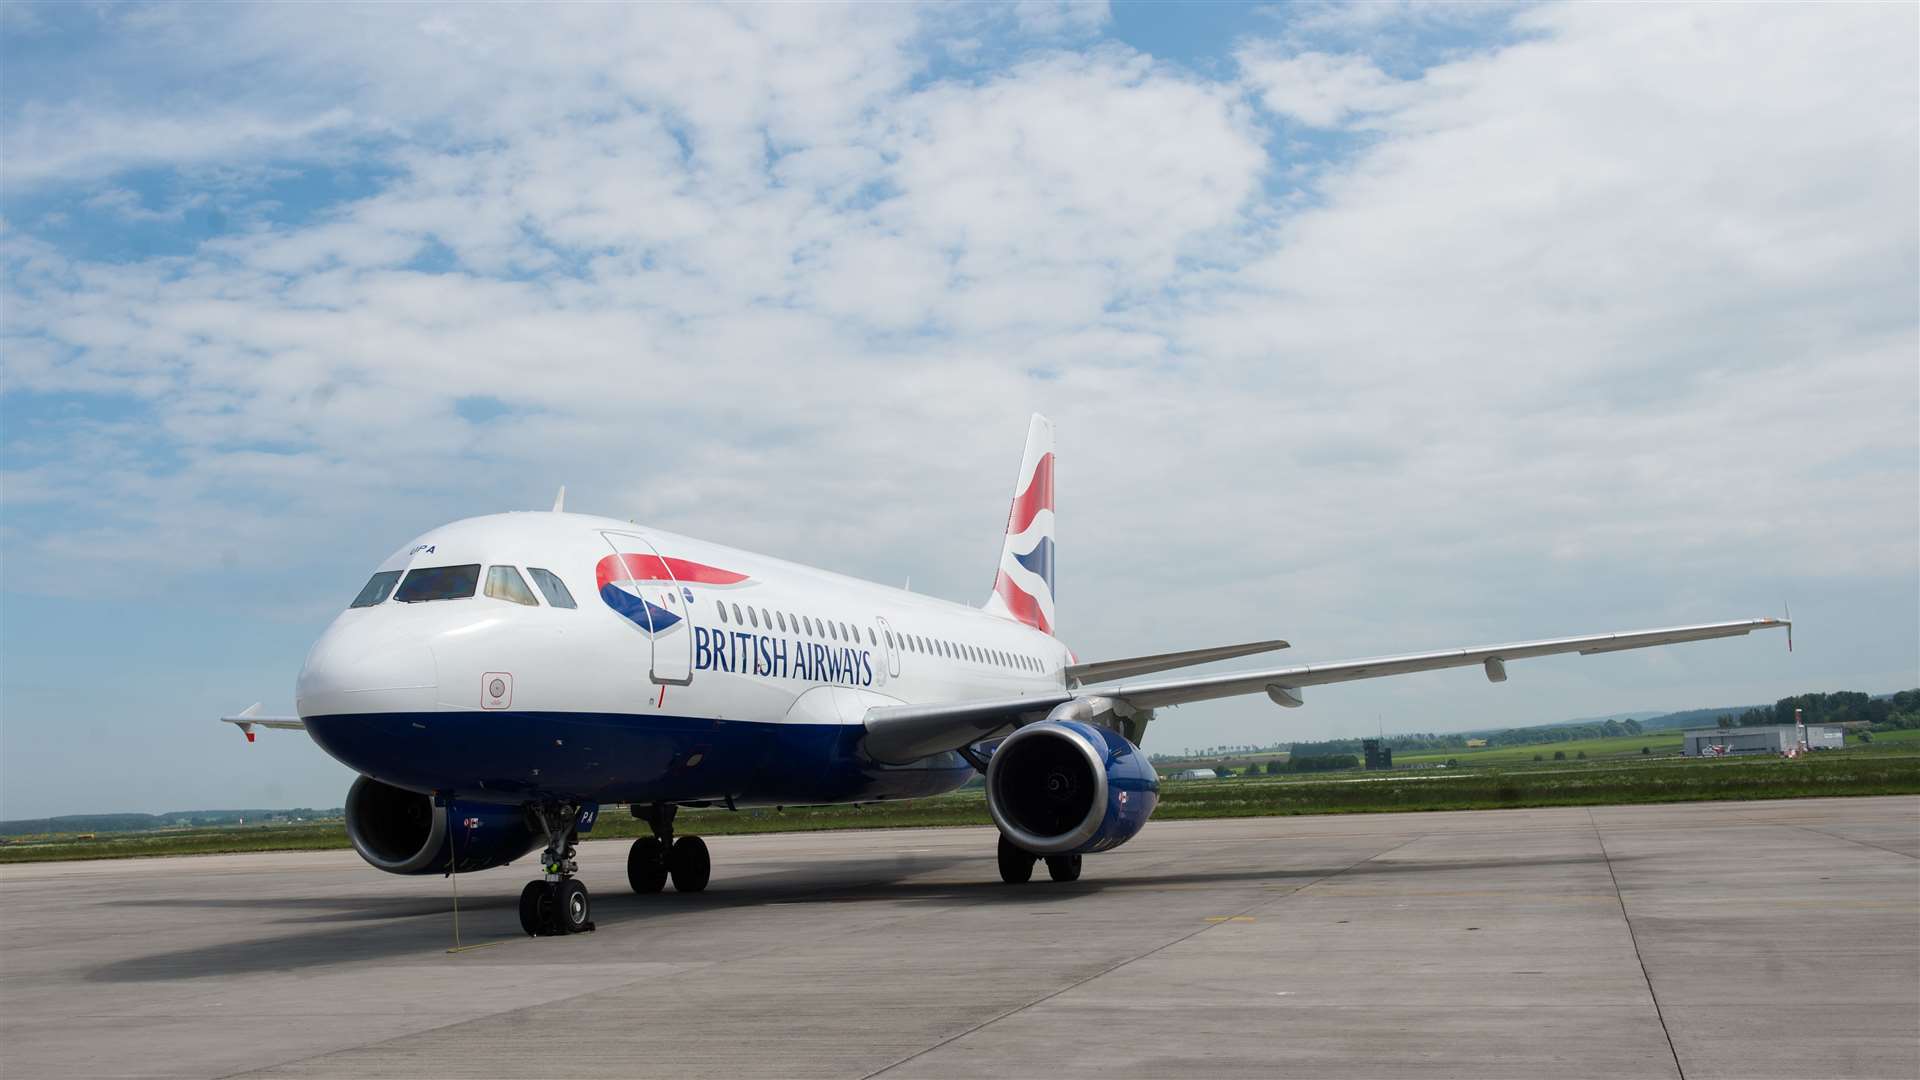 A British Airways aircraft at Inverness Airport.